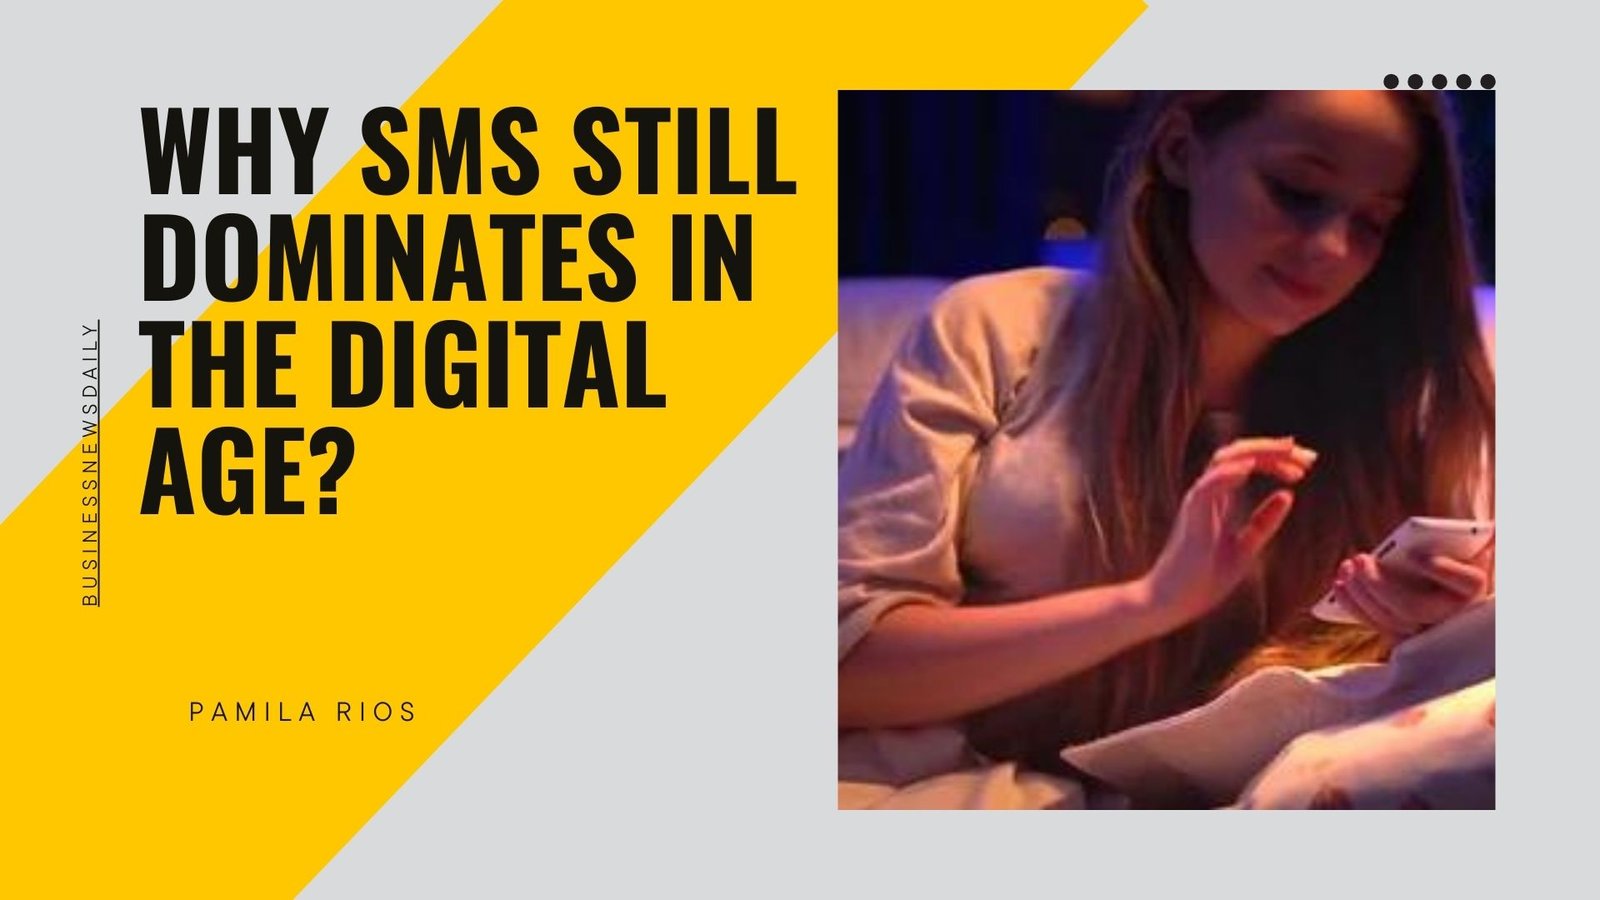 SMS Still Dominates in the Digital Age